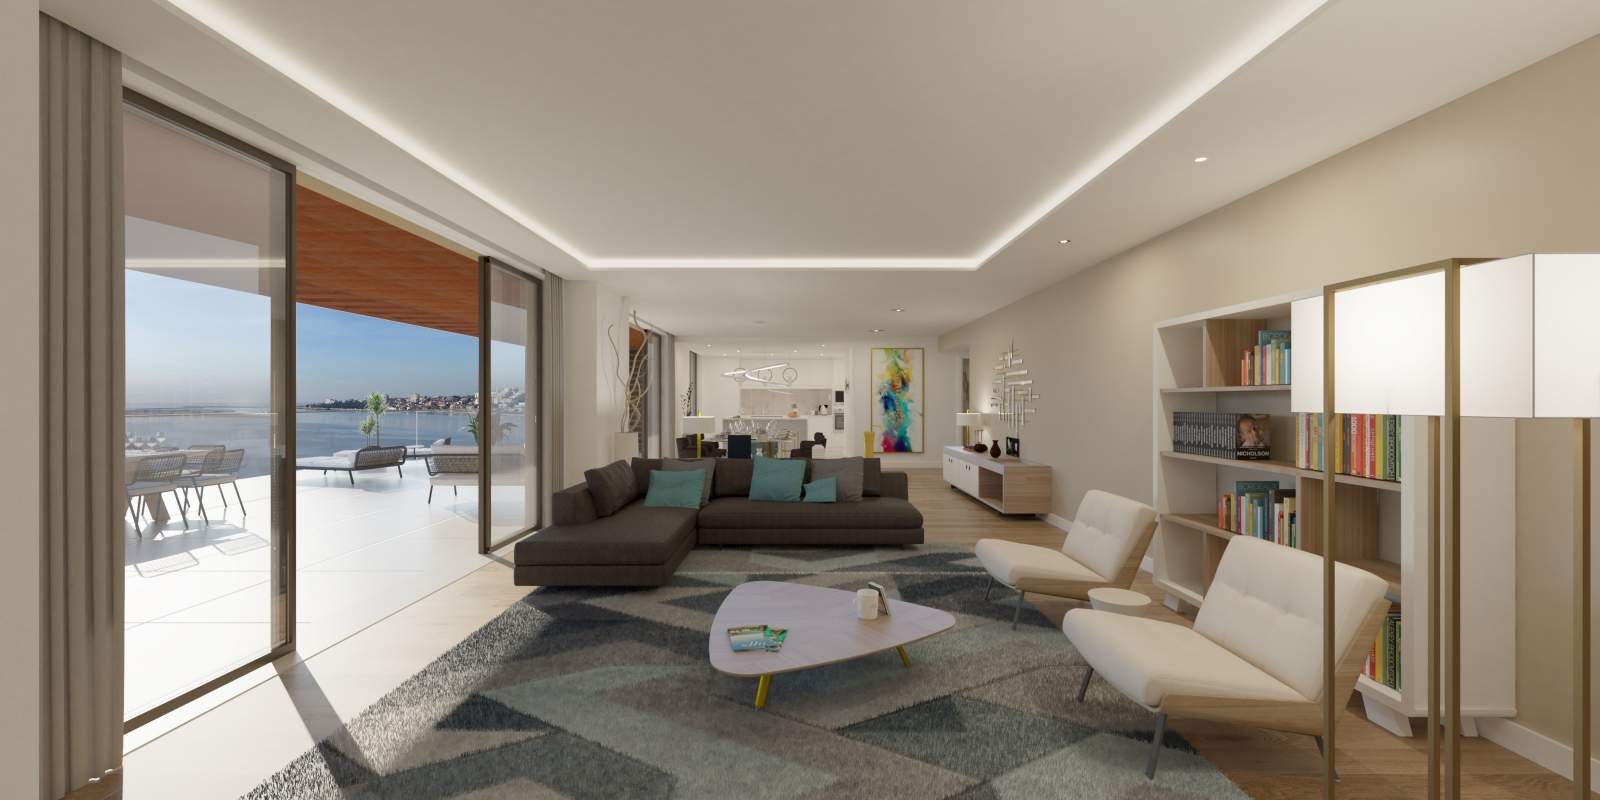 Apartment for sale with terrace, in exclusive condominium, V. N. Gaia, Porto, Portugal_176023